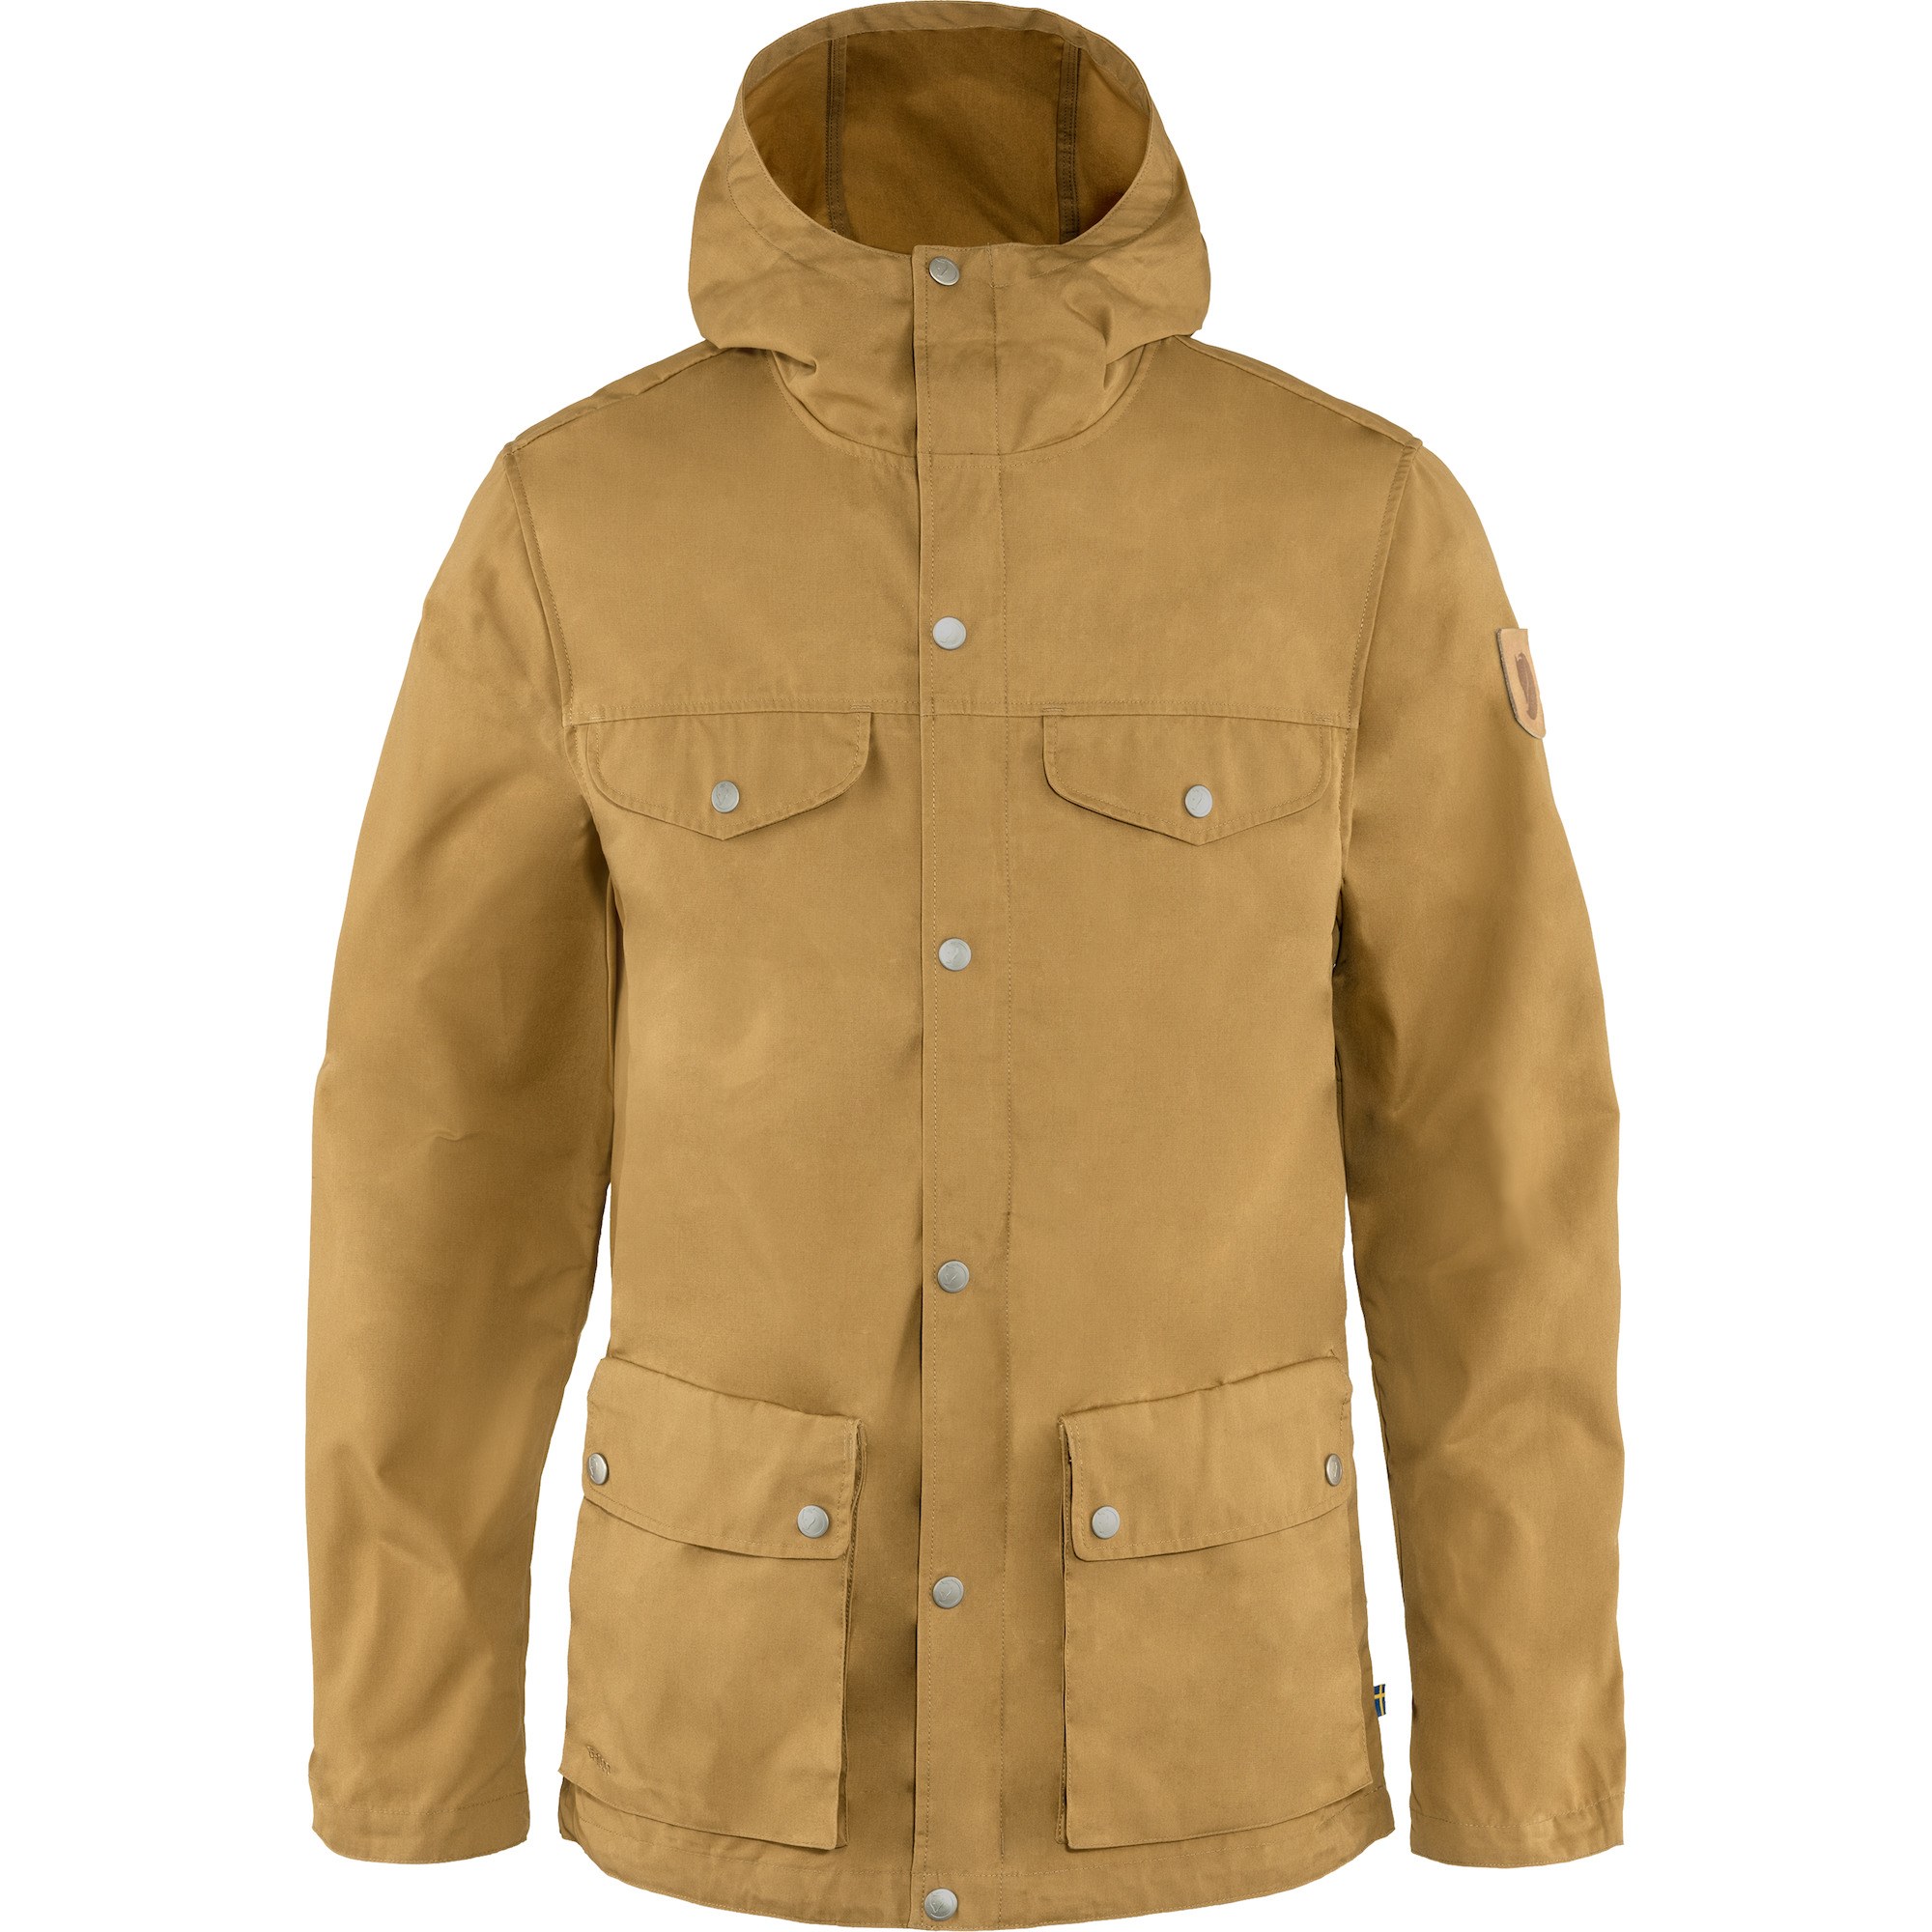 Jacket Coat For Men,Esharing Long section solid color zipper hooded cotton coat 